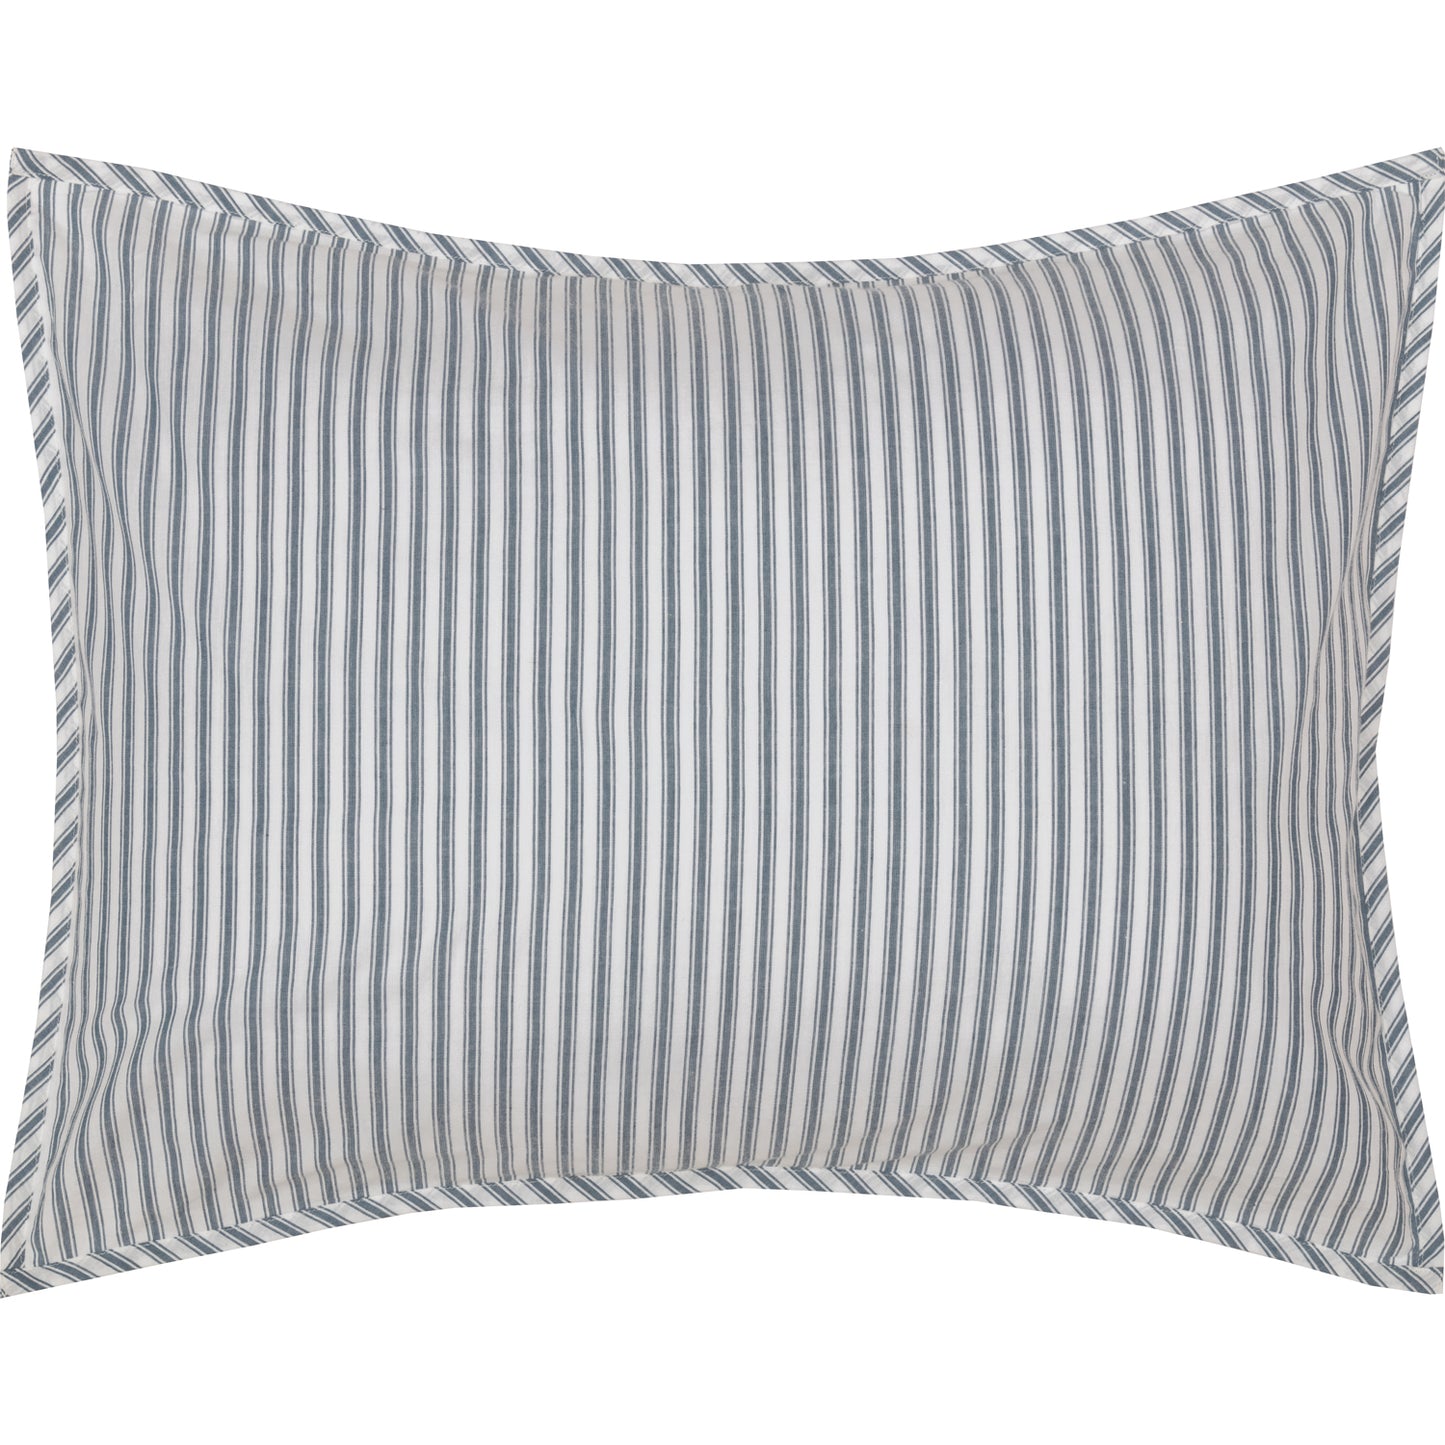 60151-Sawyer-Mill-Blue-Ticking-Stripe-5pc-Daybed-Quilt-Set-1-Quilt-1-Bed-Skirt-3-Standard-Shams-image-5